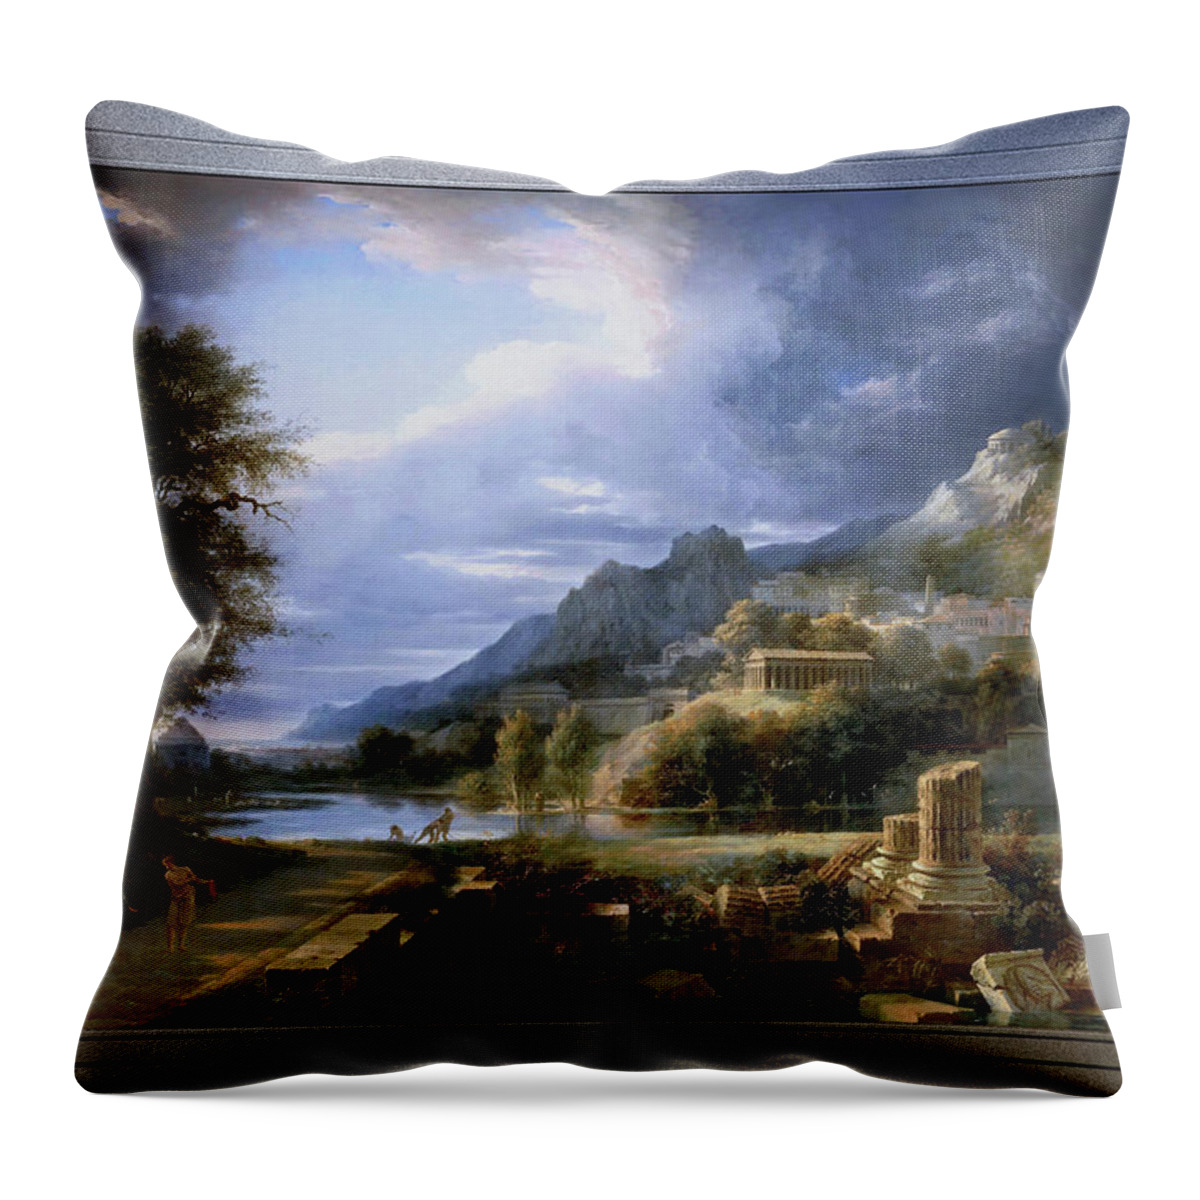 Ancient City Of Agrigent Throw Pillow featuring the painting Ancient City of Agrigent by Pierre-Henri de Valenciennes by Rolando Burbon